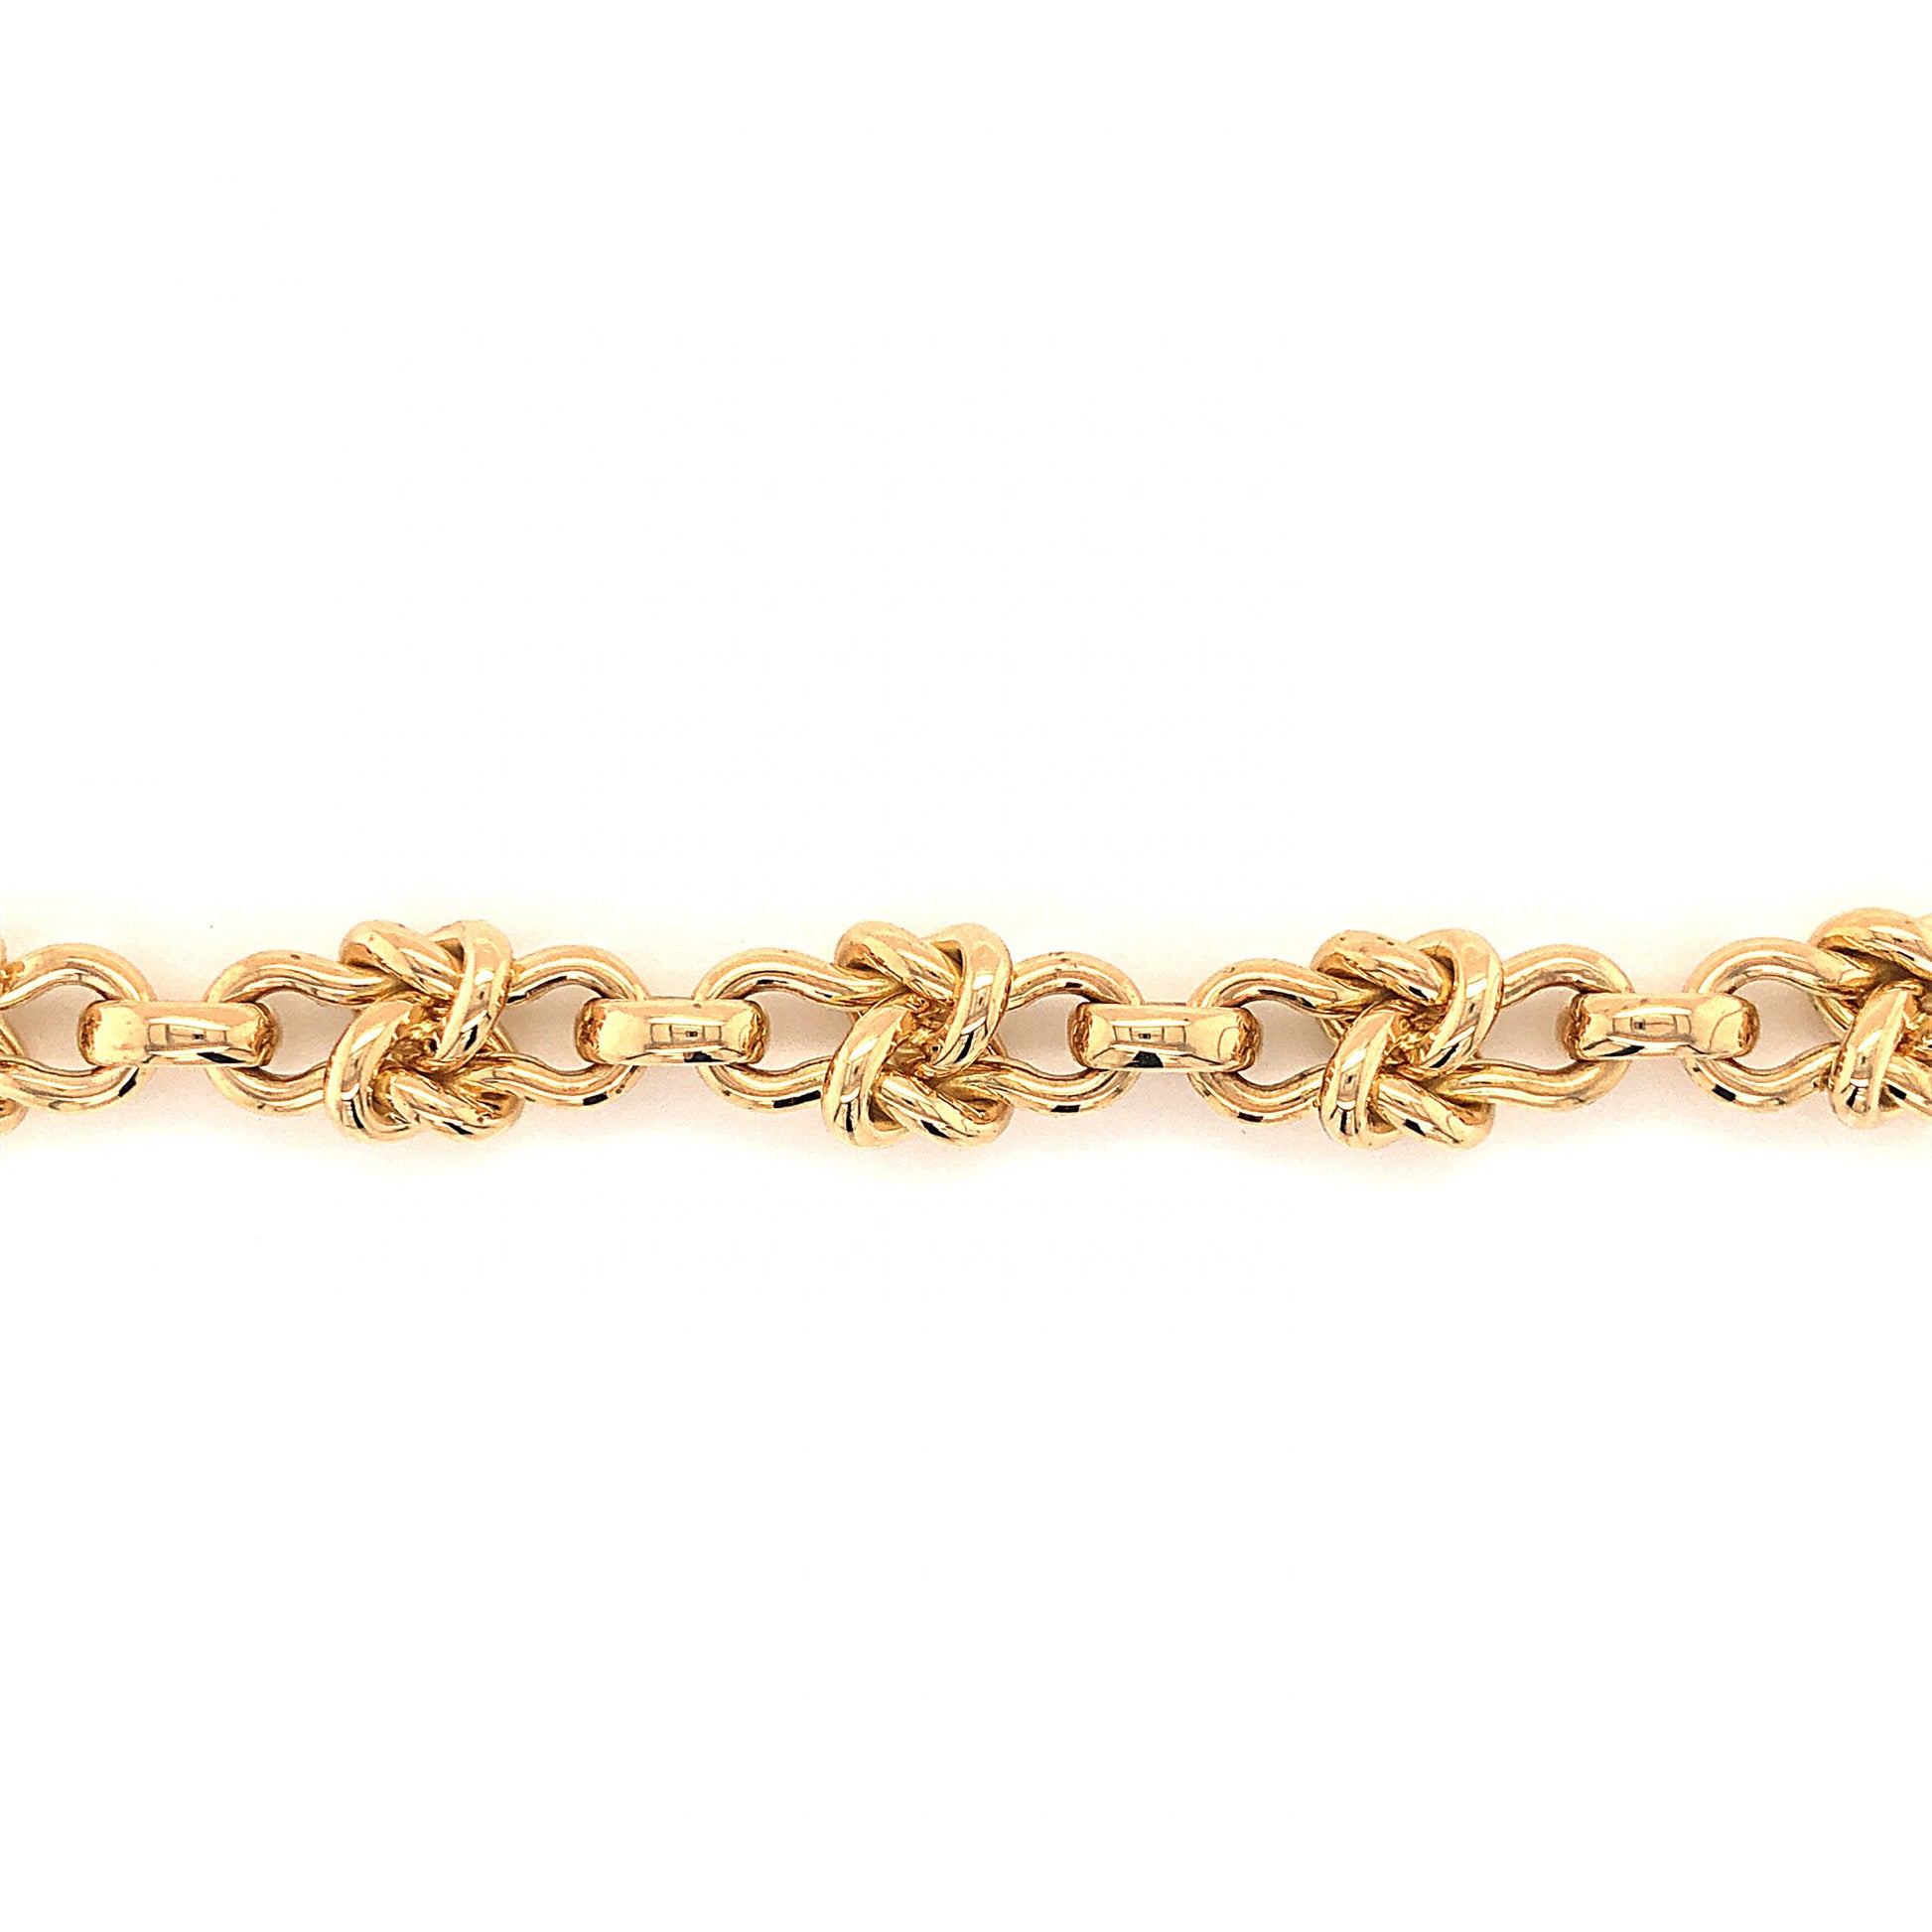 Shreve Crump & Low Bracelet in 18k Yellow Gold